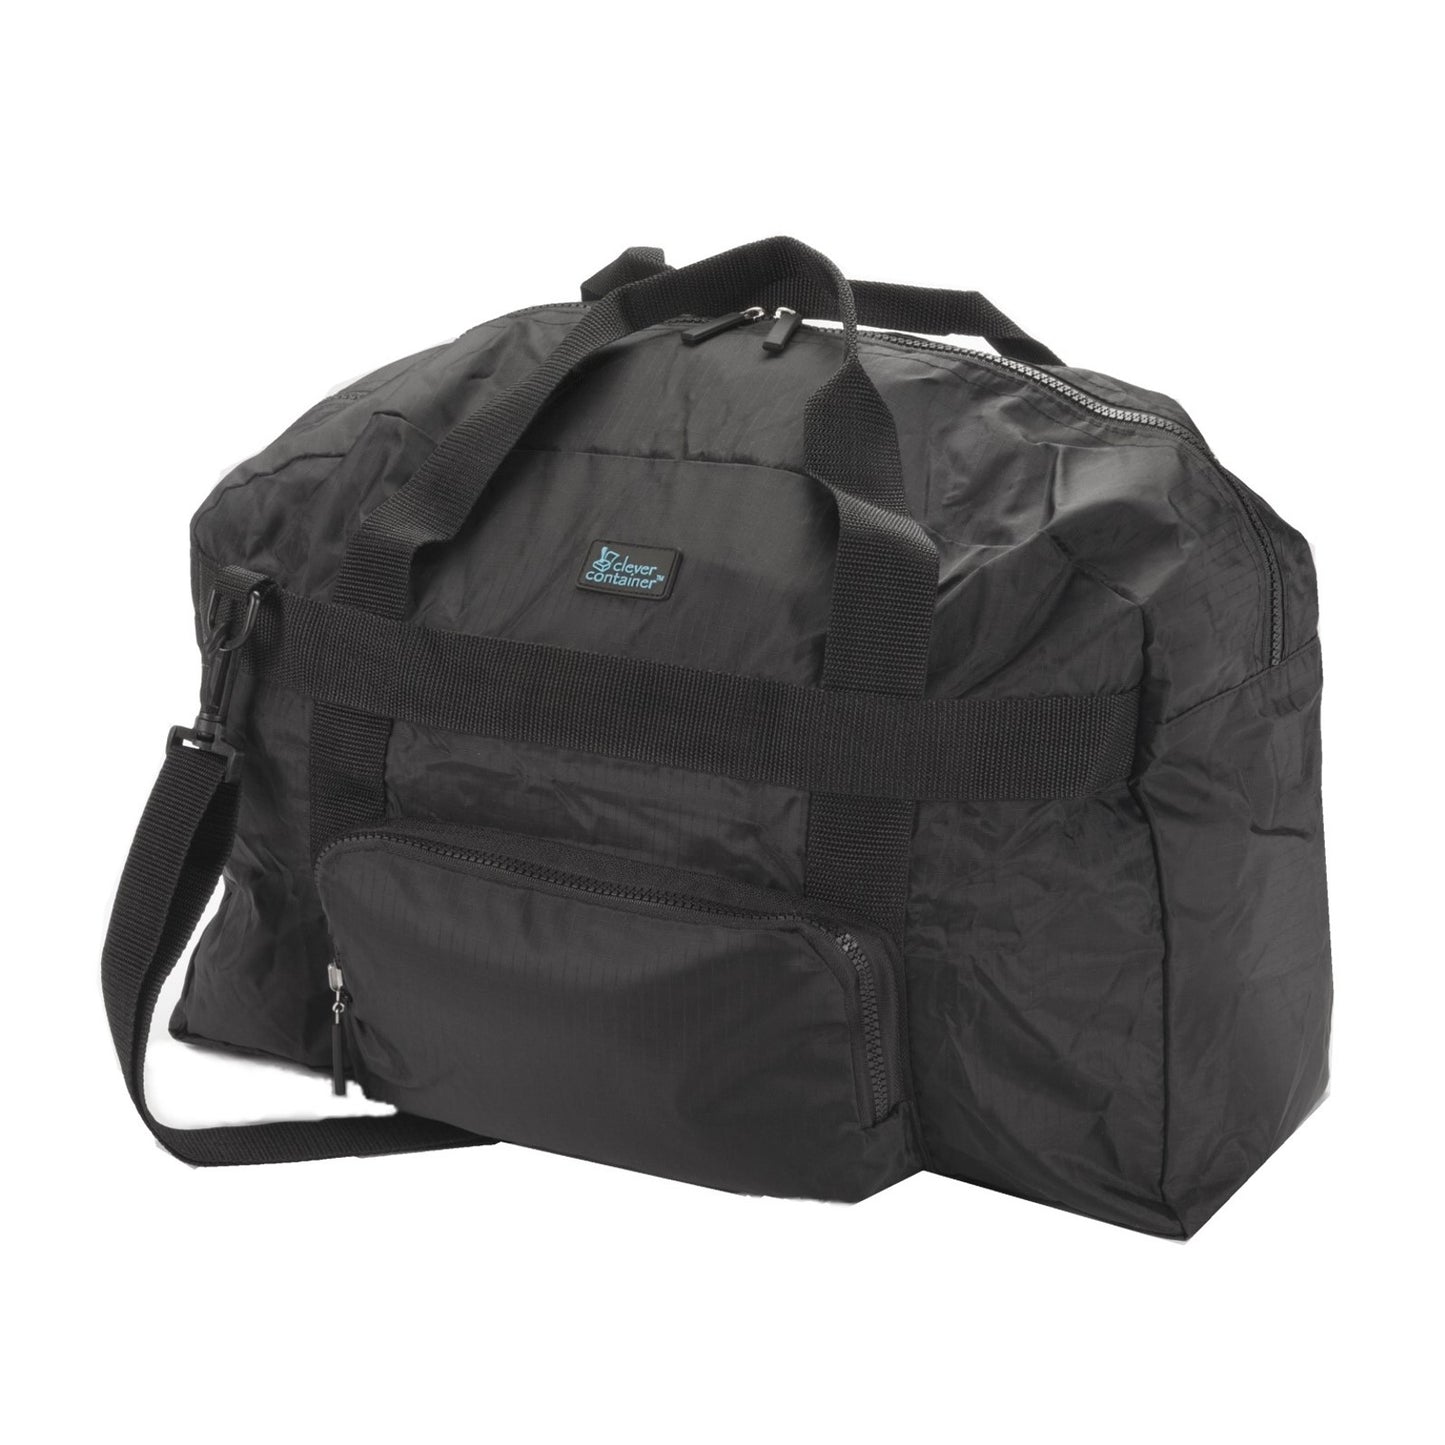 Collapsible Travel Bag - Black